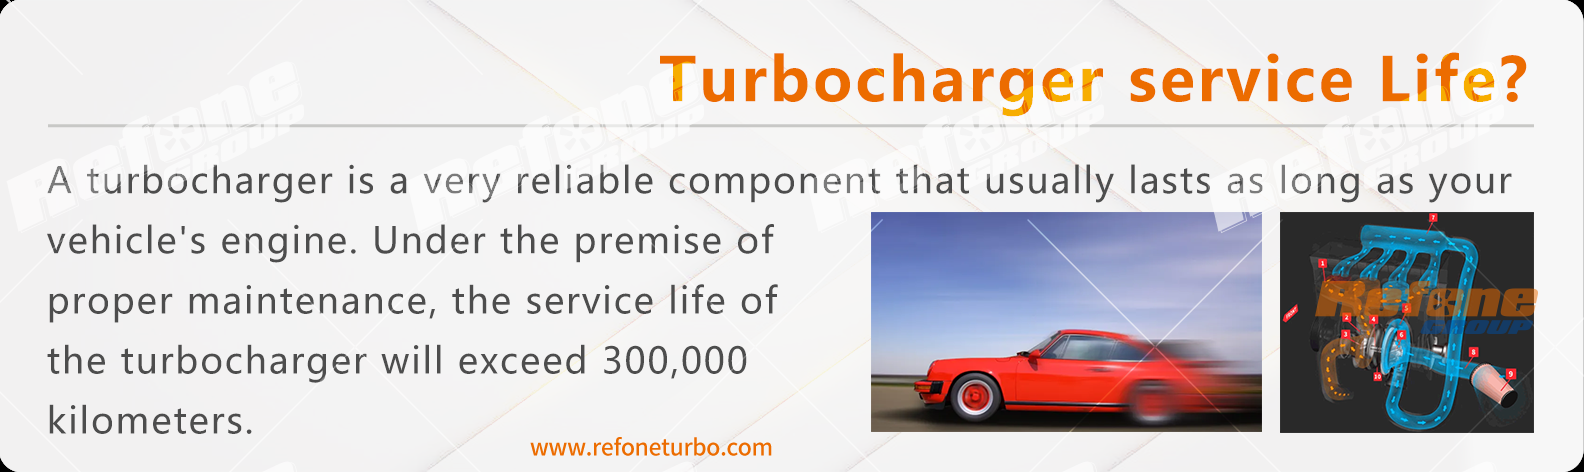 turbocharger service life